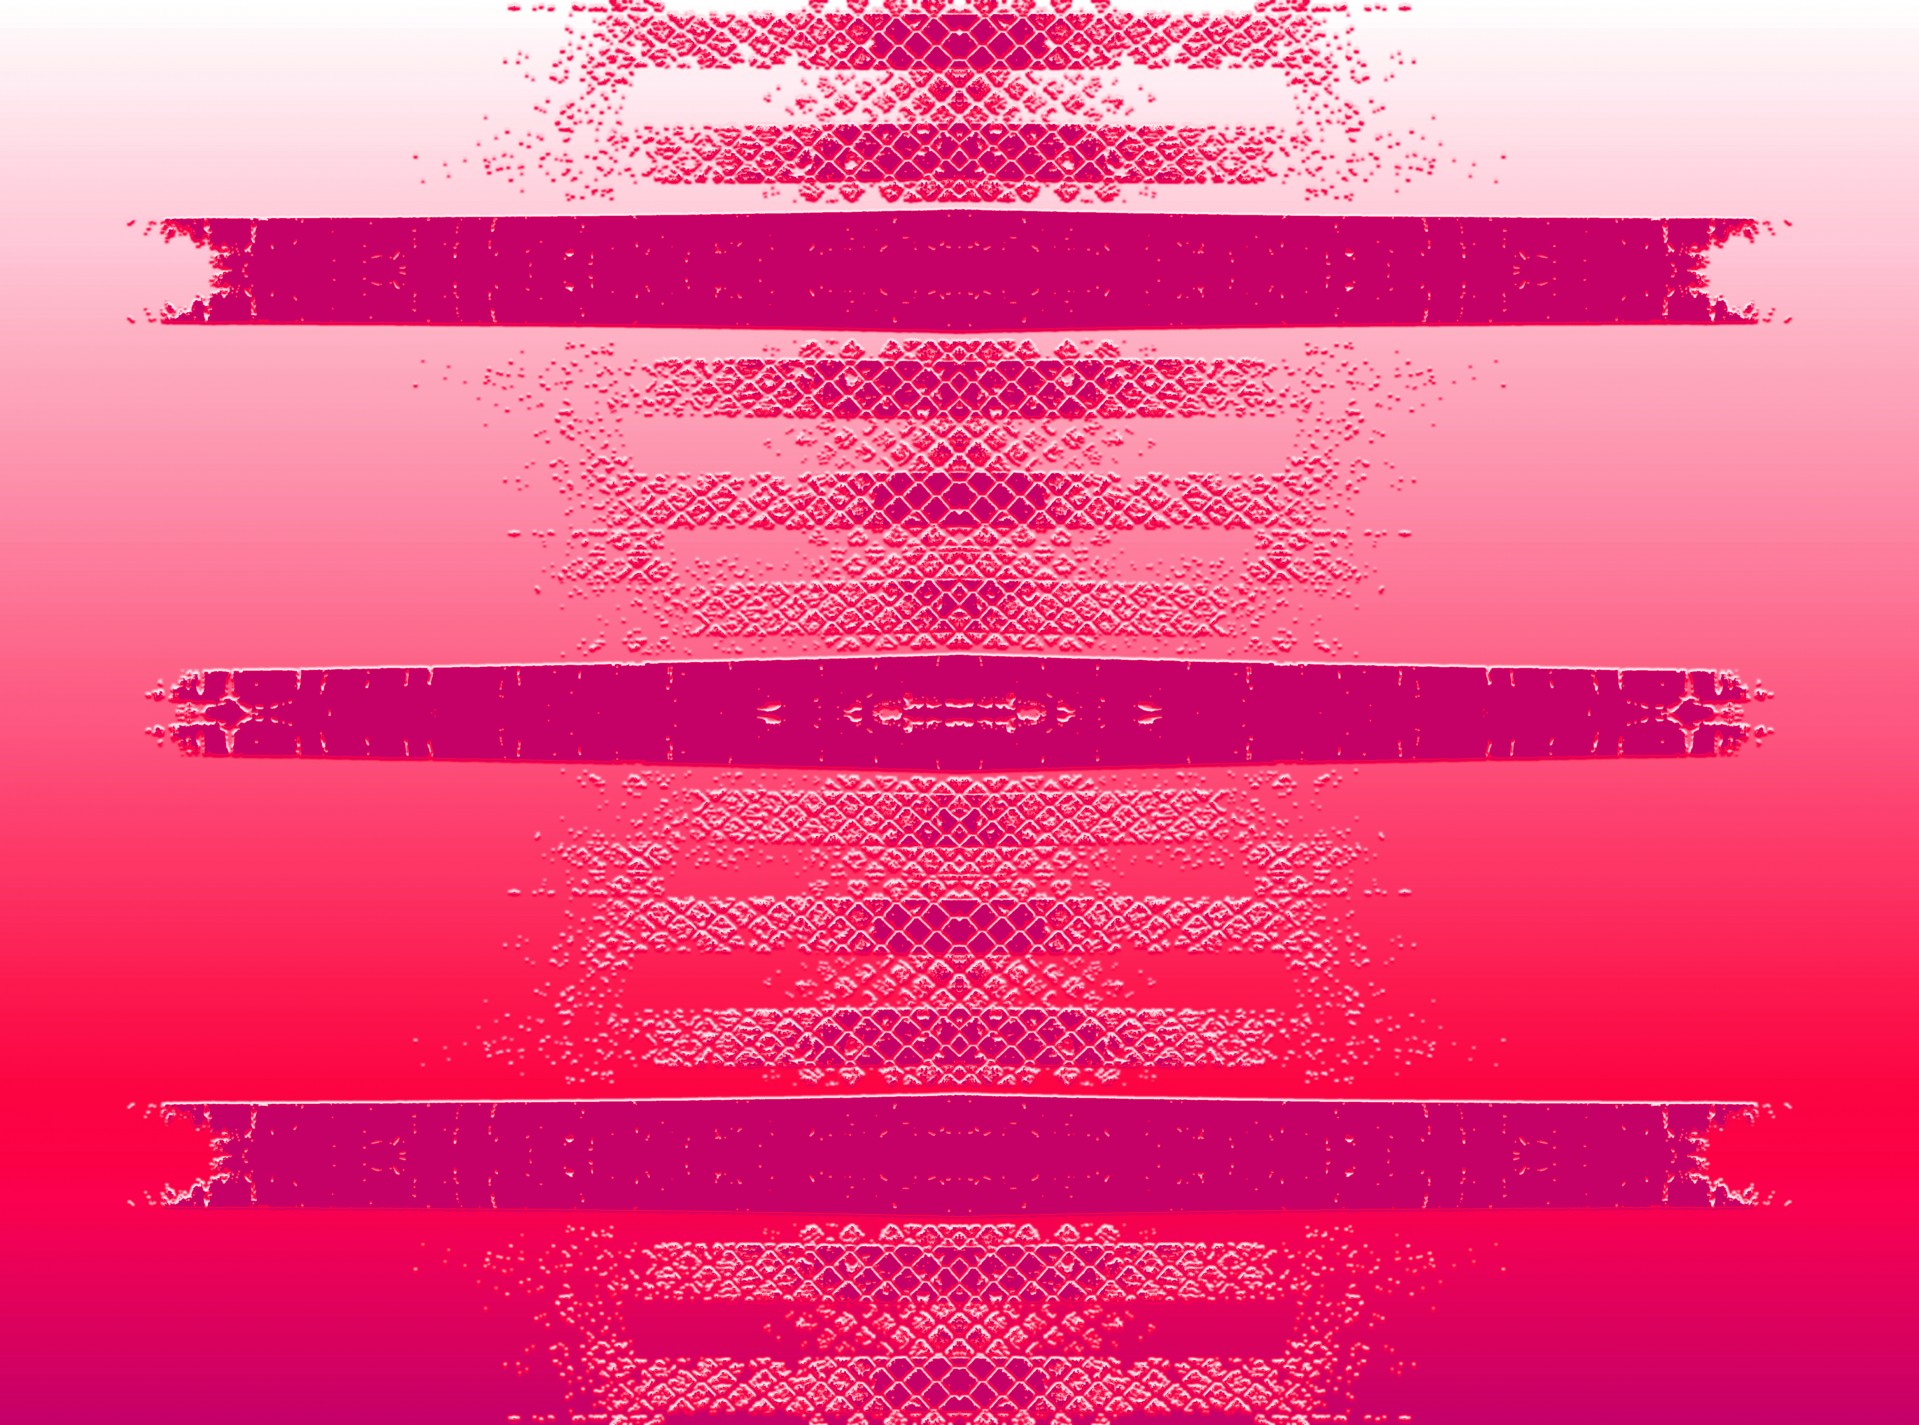 imprint pink-purple diffused free photo